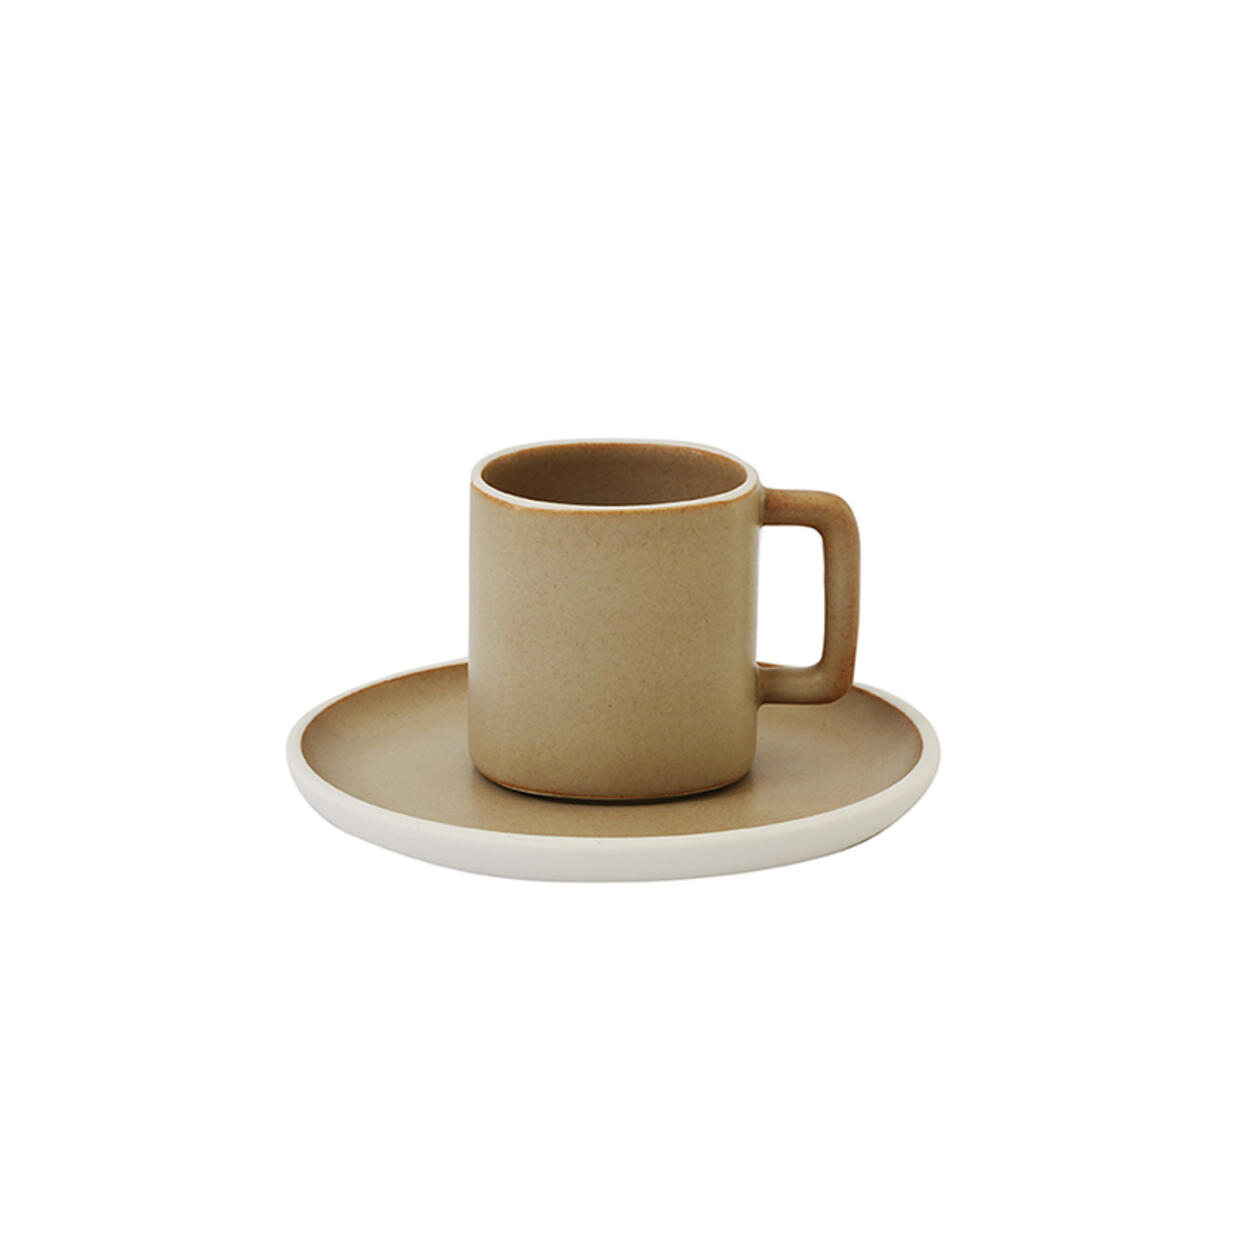 Handmade ceramic espresso cup & saucer Studio kraft